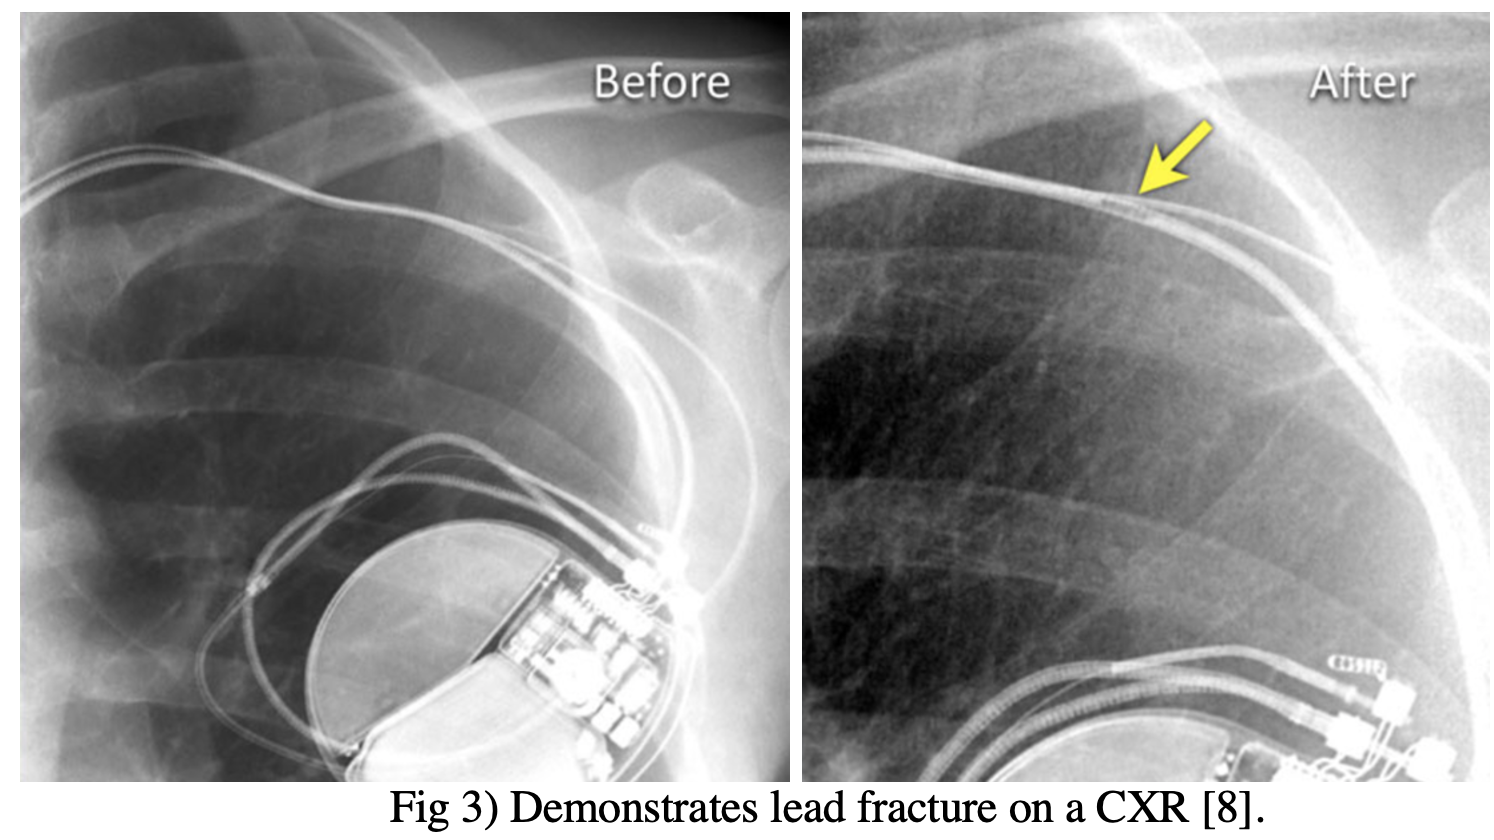 transvenous pacemaker failure to capture